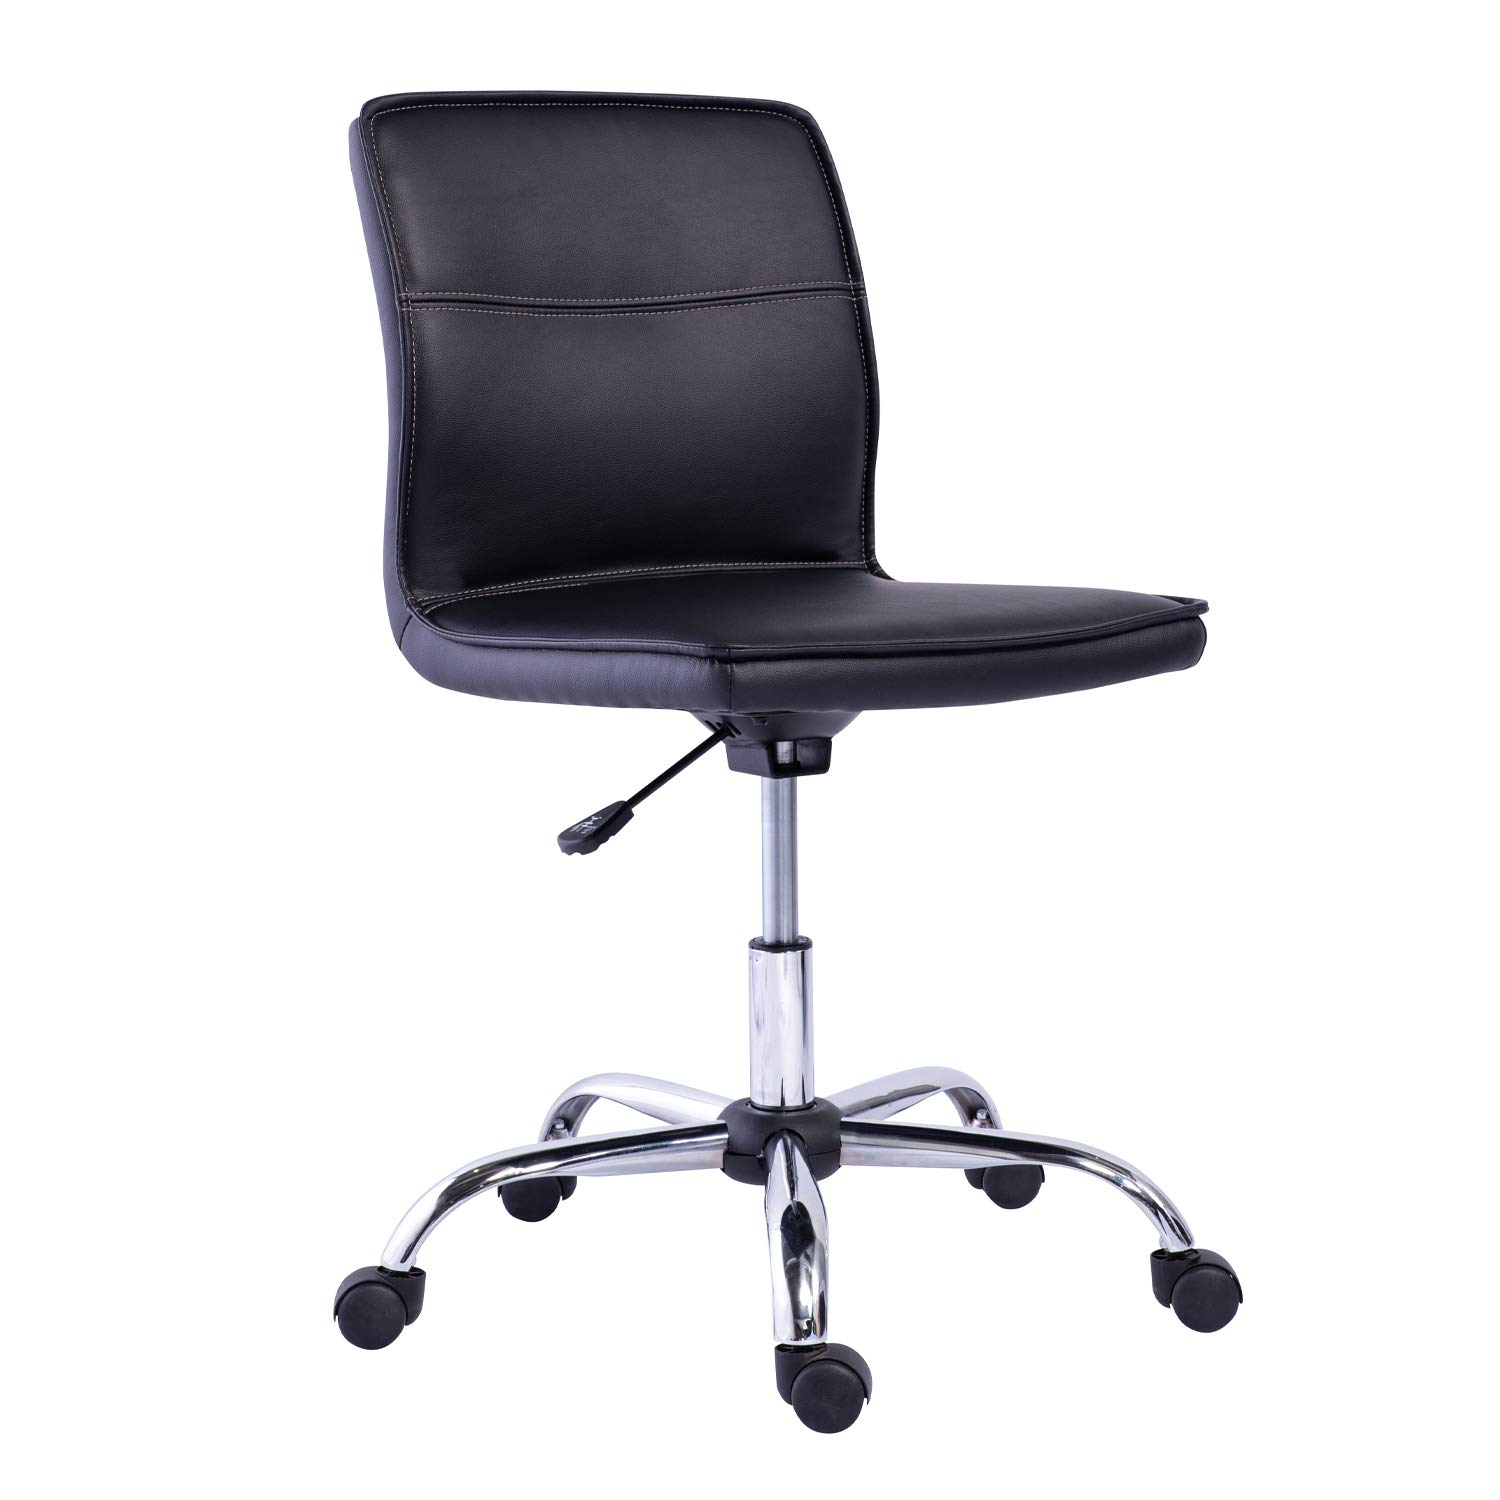 Amazon Basics Modern Armless Office Desk Chair - Height Adjustable, 360-Degree Swivel, 275Lb Capacity - Black/Chrome